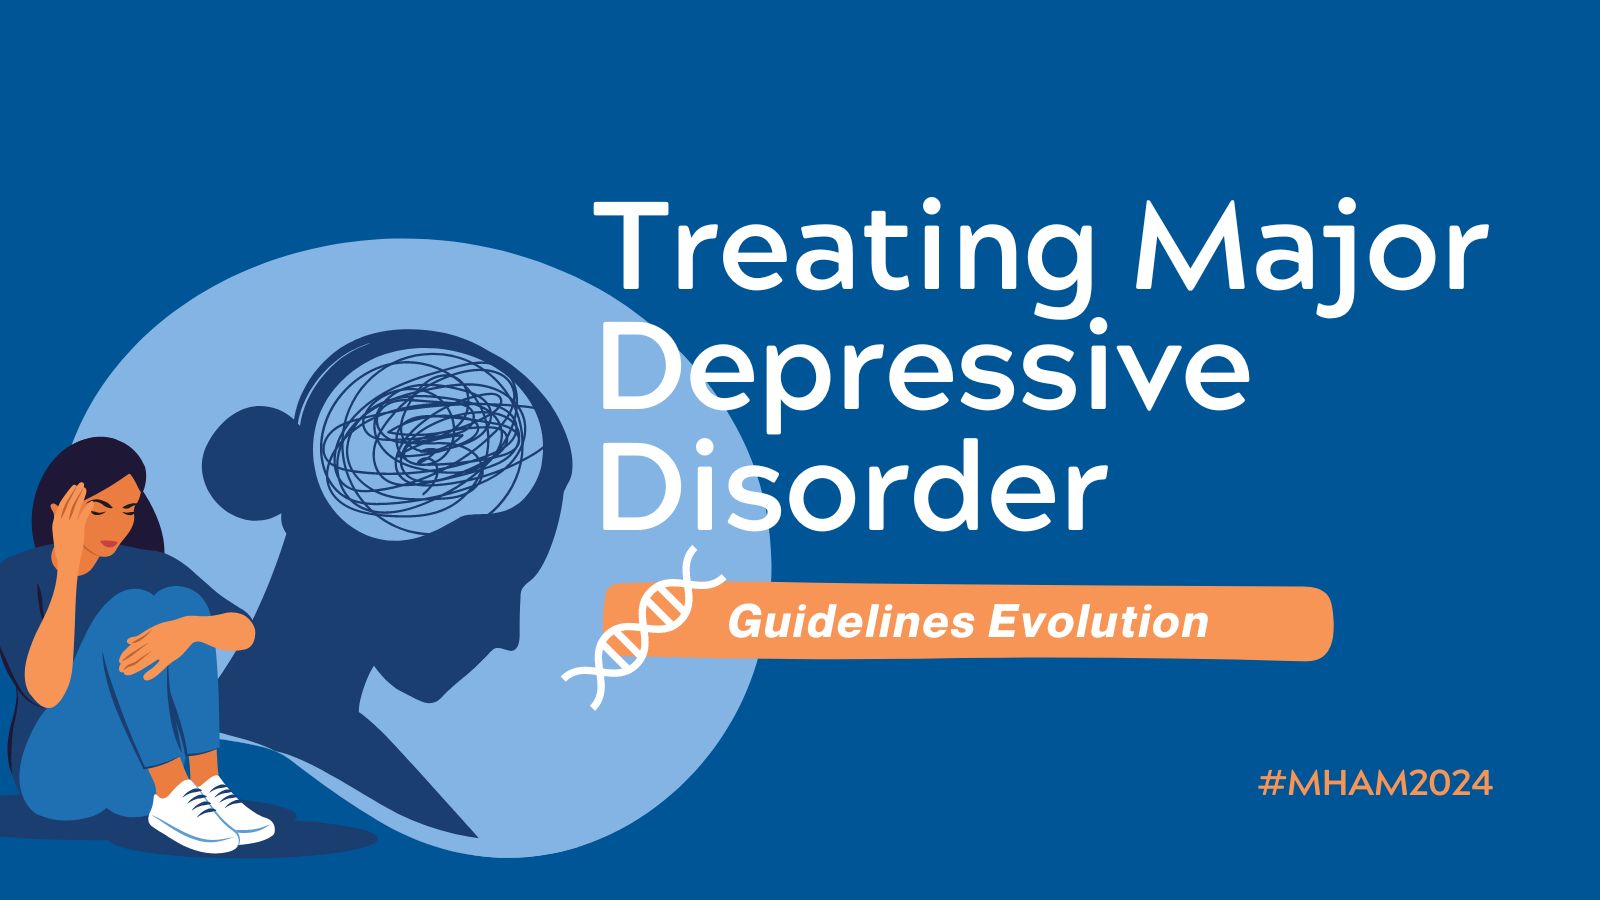 Treating Major Depressive Disorder - Guidelines Evolution